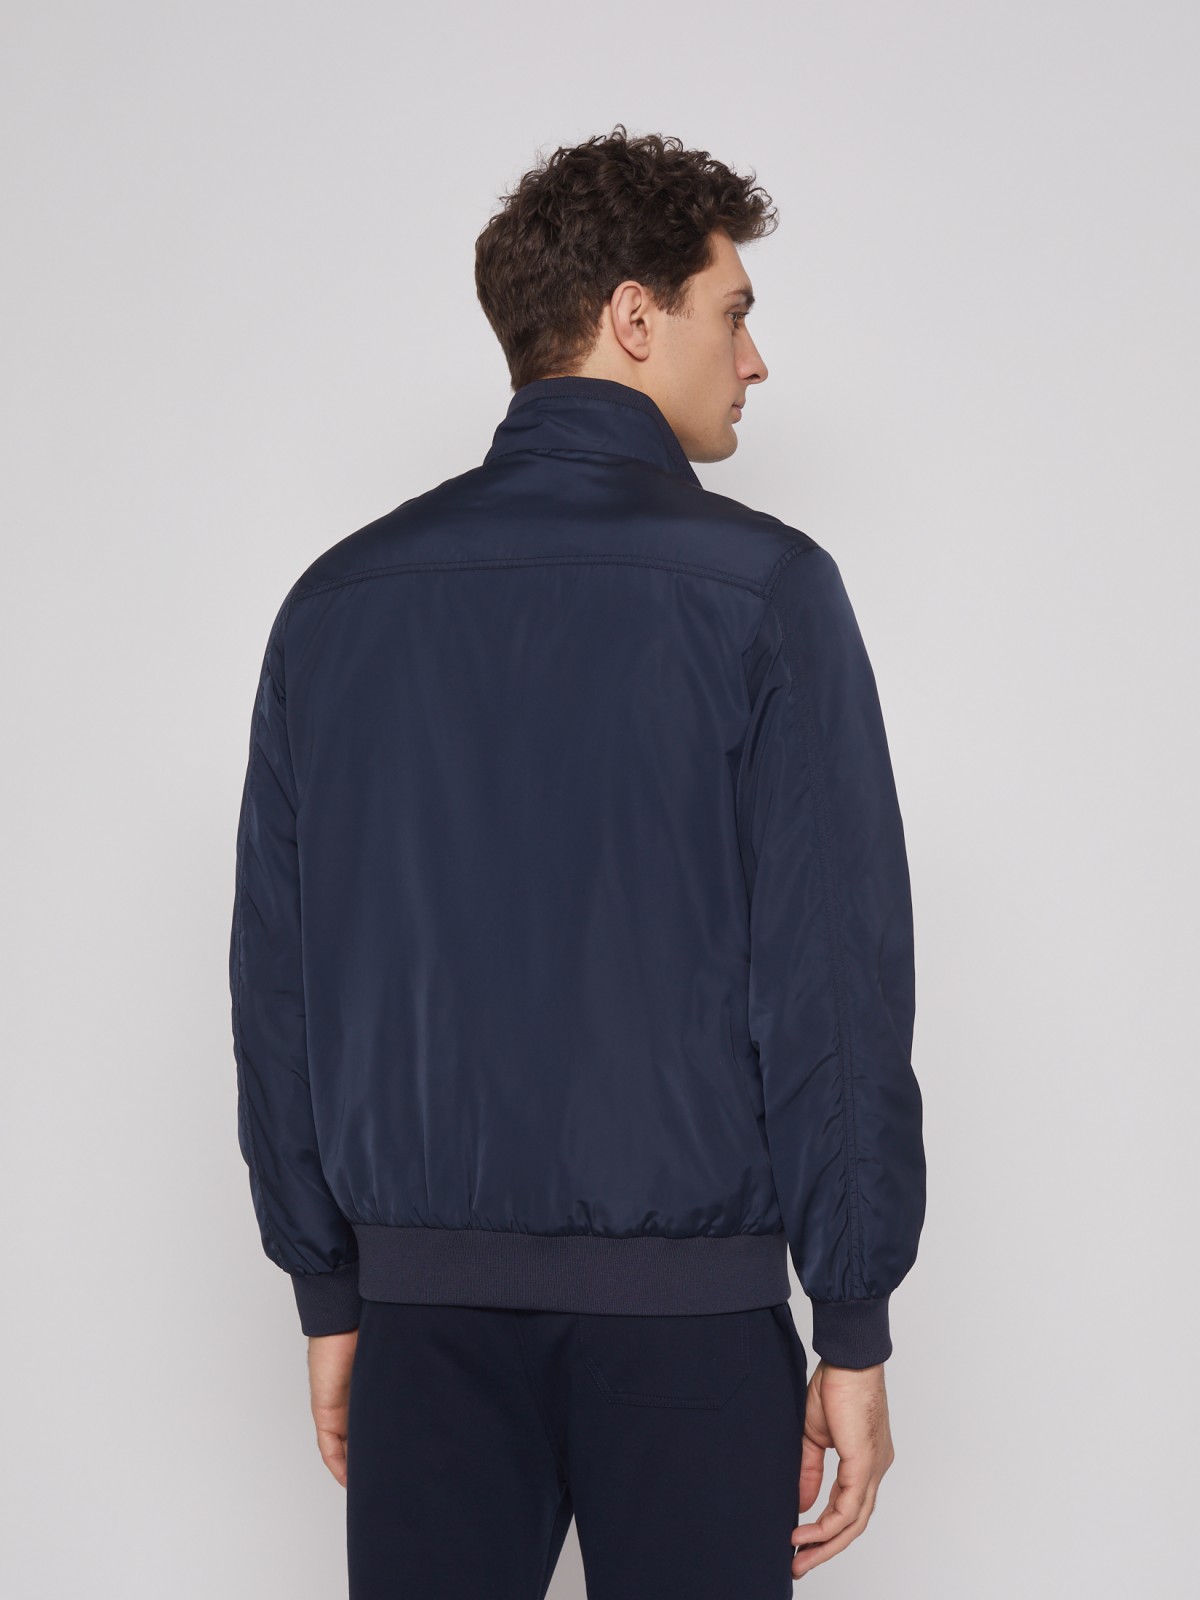 Куртка с воротником-стойкой zolla 012215602034, цвет темно-синий, размер L - фото 6